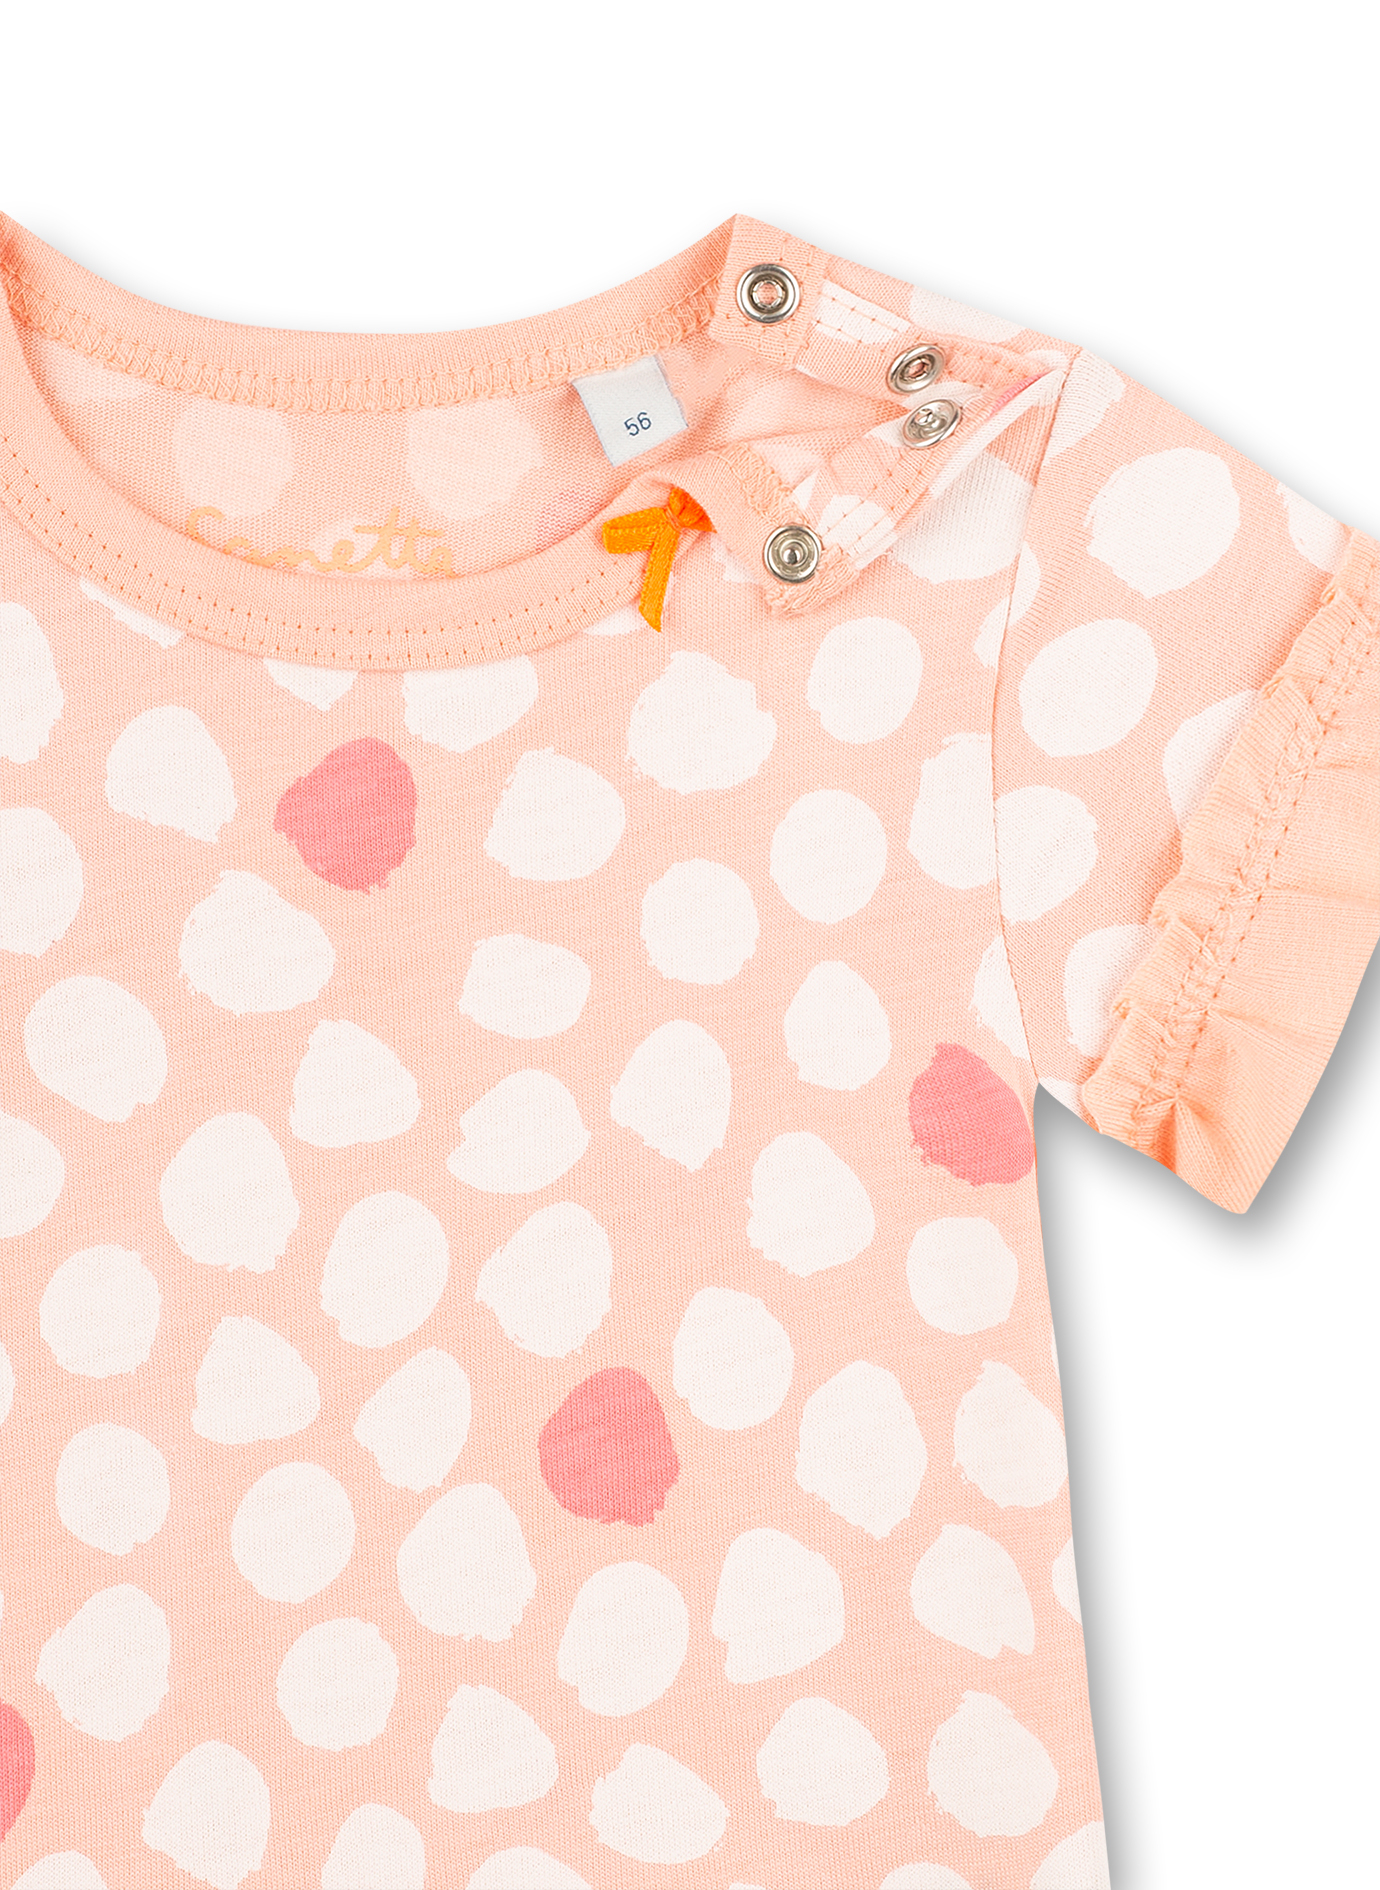 Mädchen T-Shirt Rosa Dots-Allover Safari